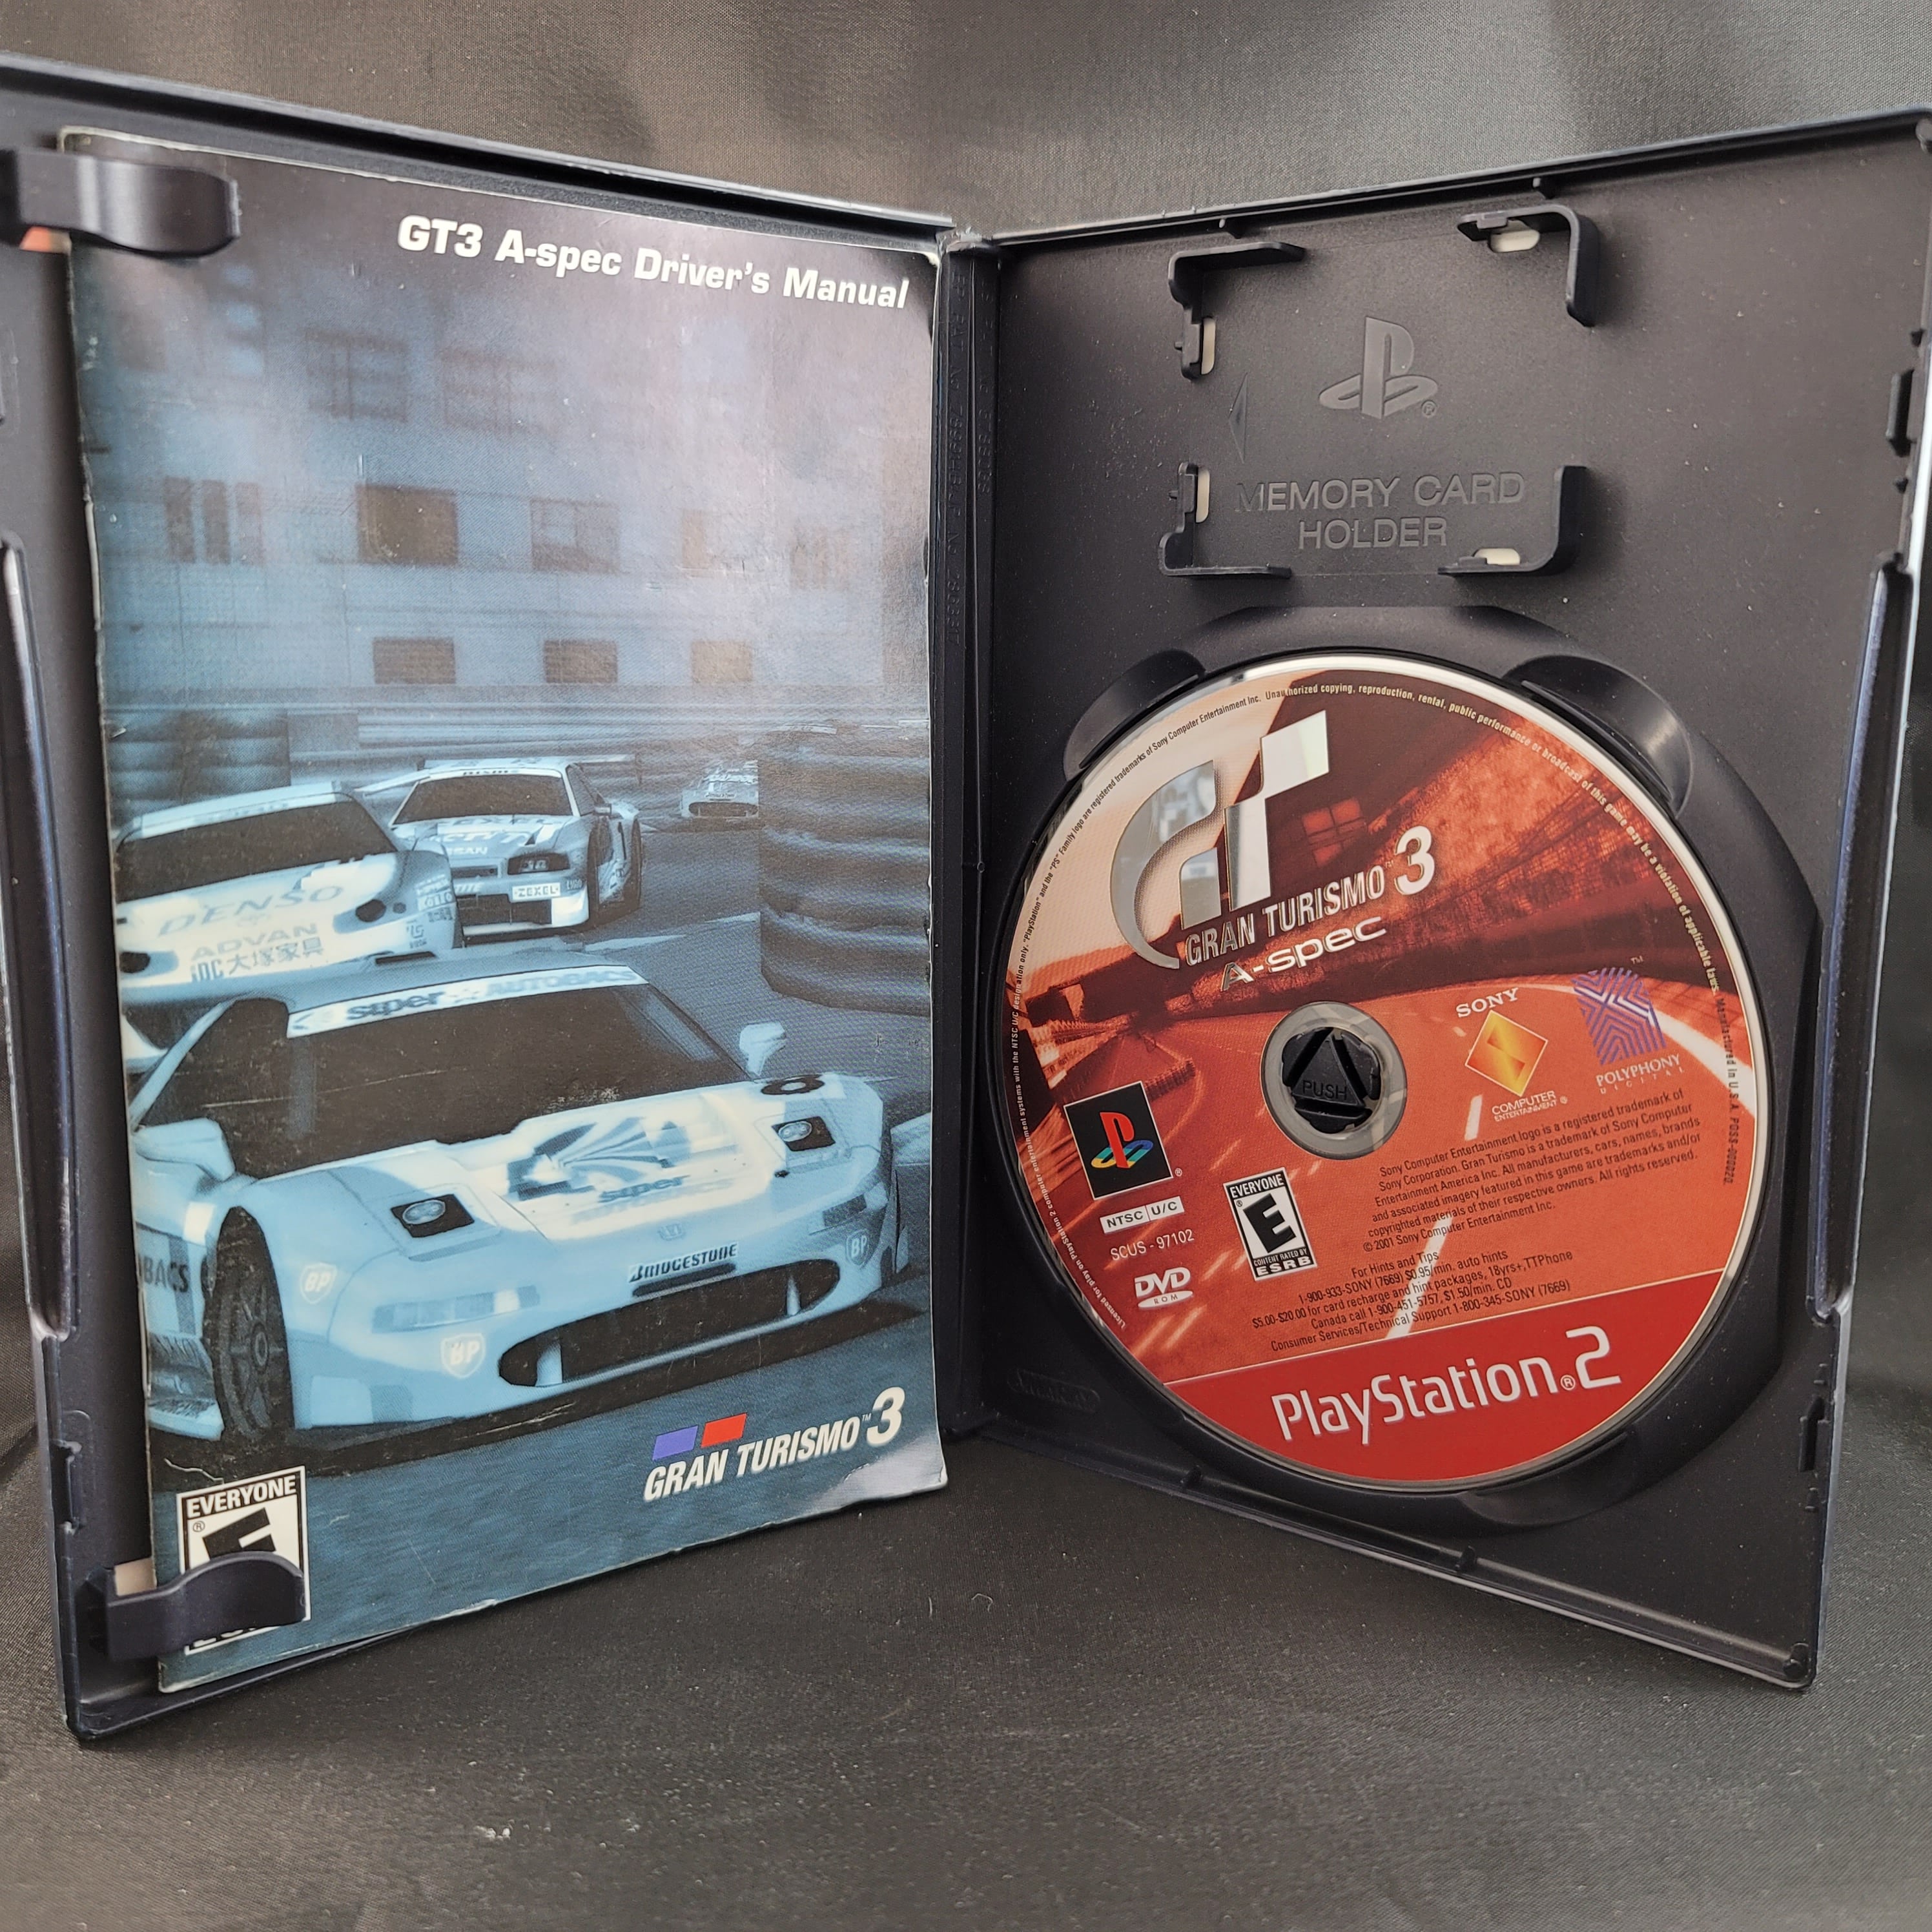 Playstation 2 Gran Turismo 3 A-Spec - Geek-Is-Us